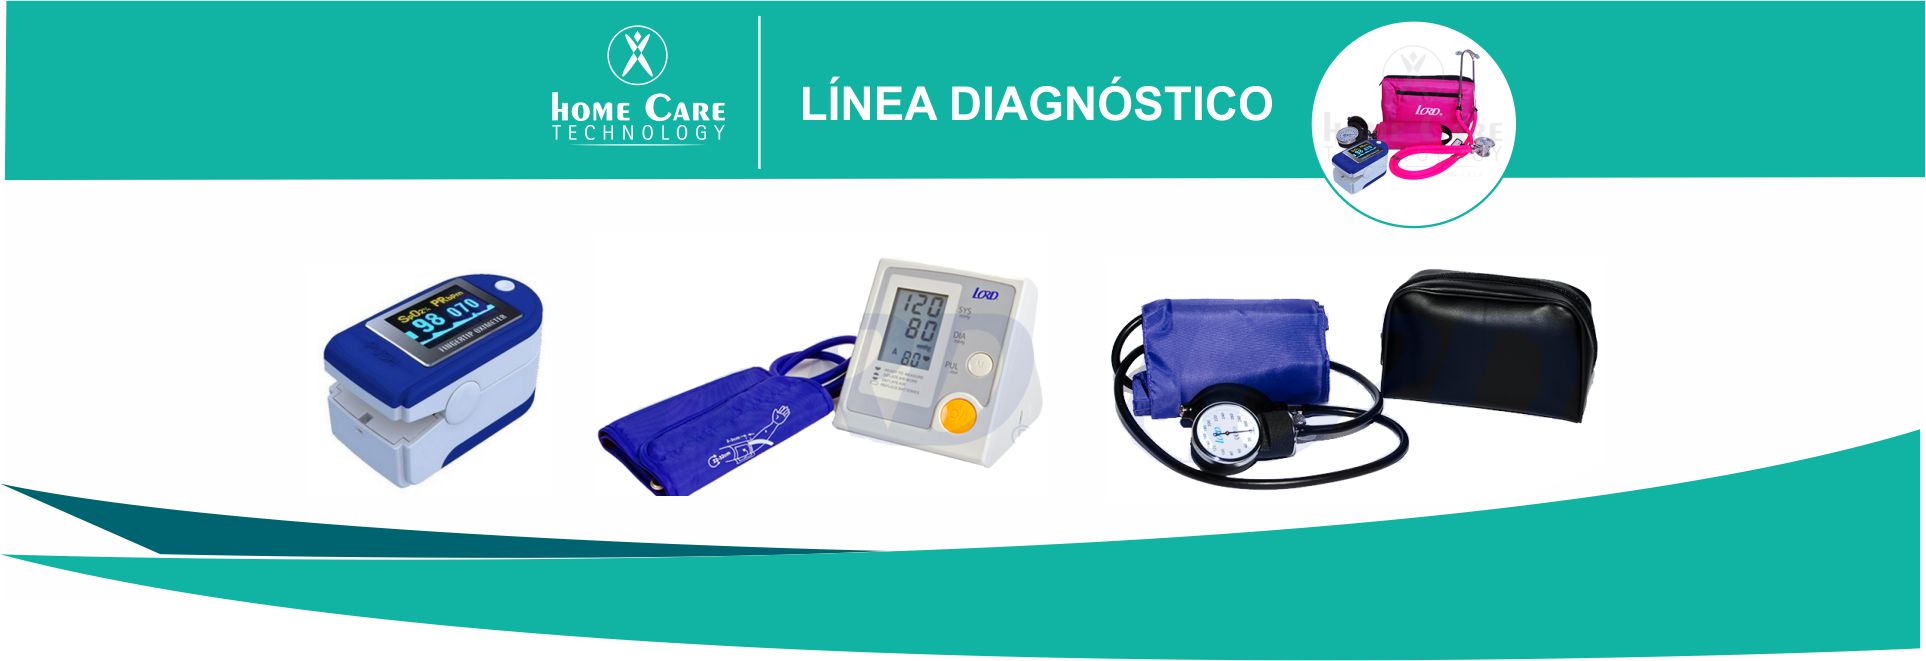 BALANZA DIGITAL DE PESO CORPORAL - Home Care Technology